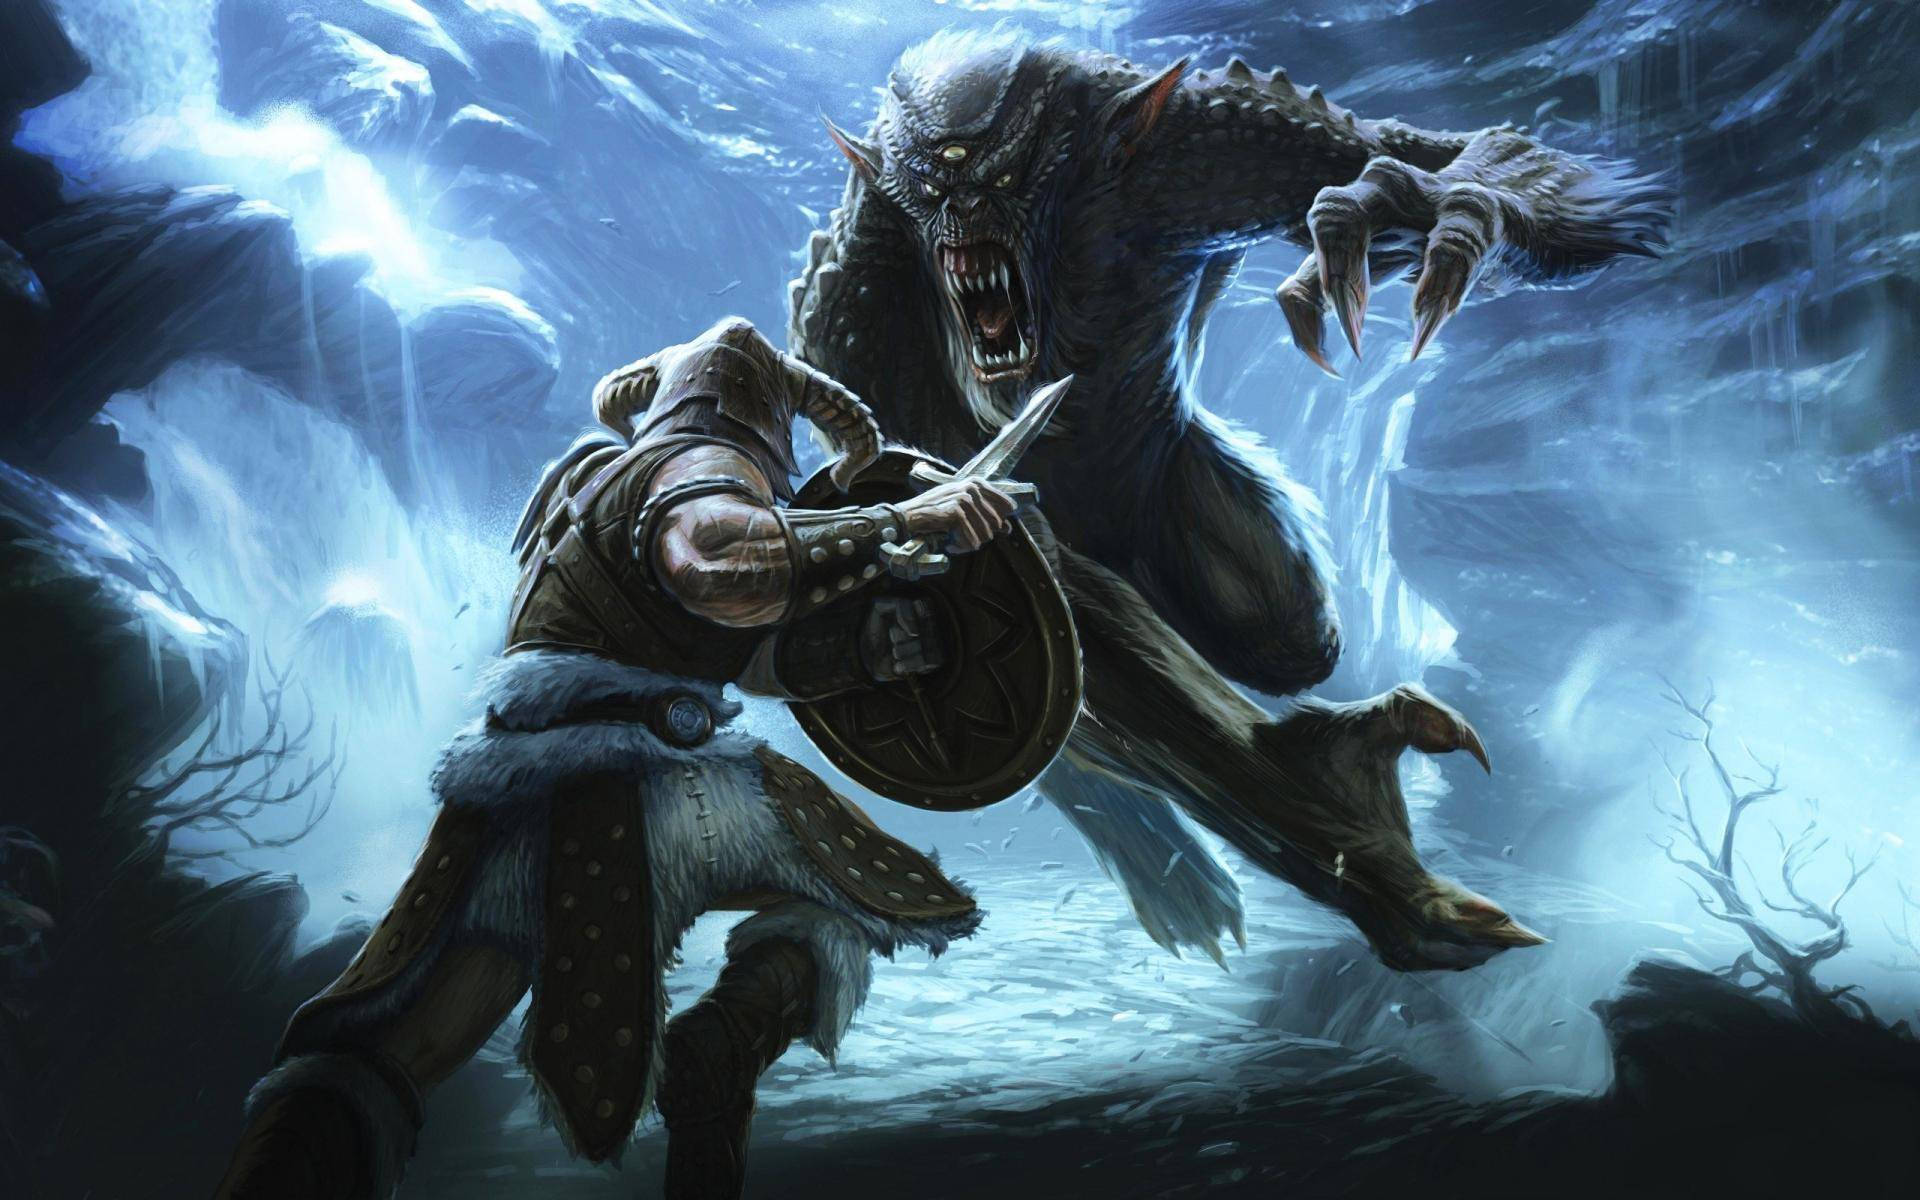 "The Werewolf Barbarian Battle" Wallpaper